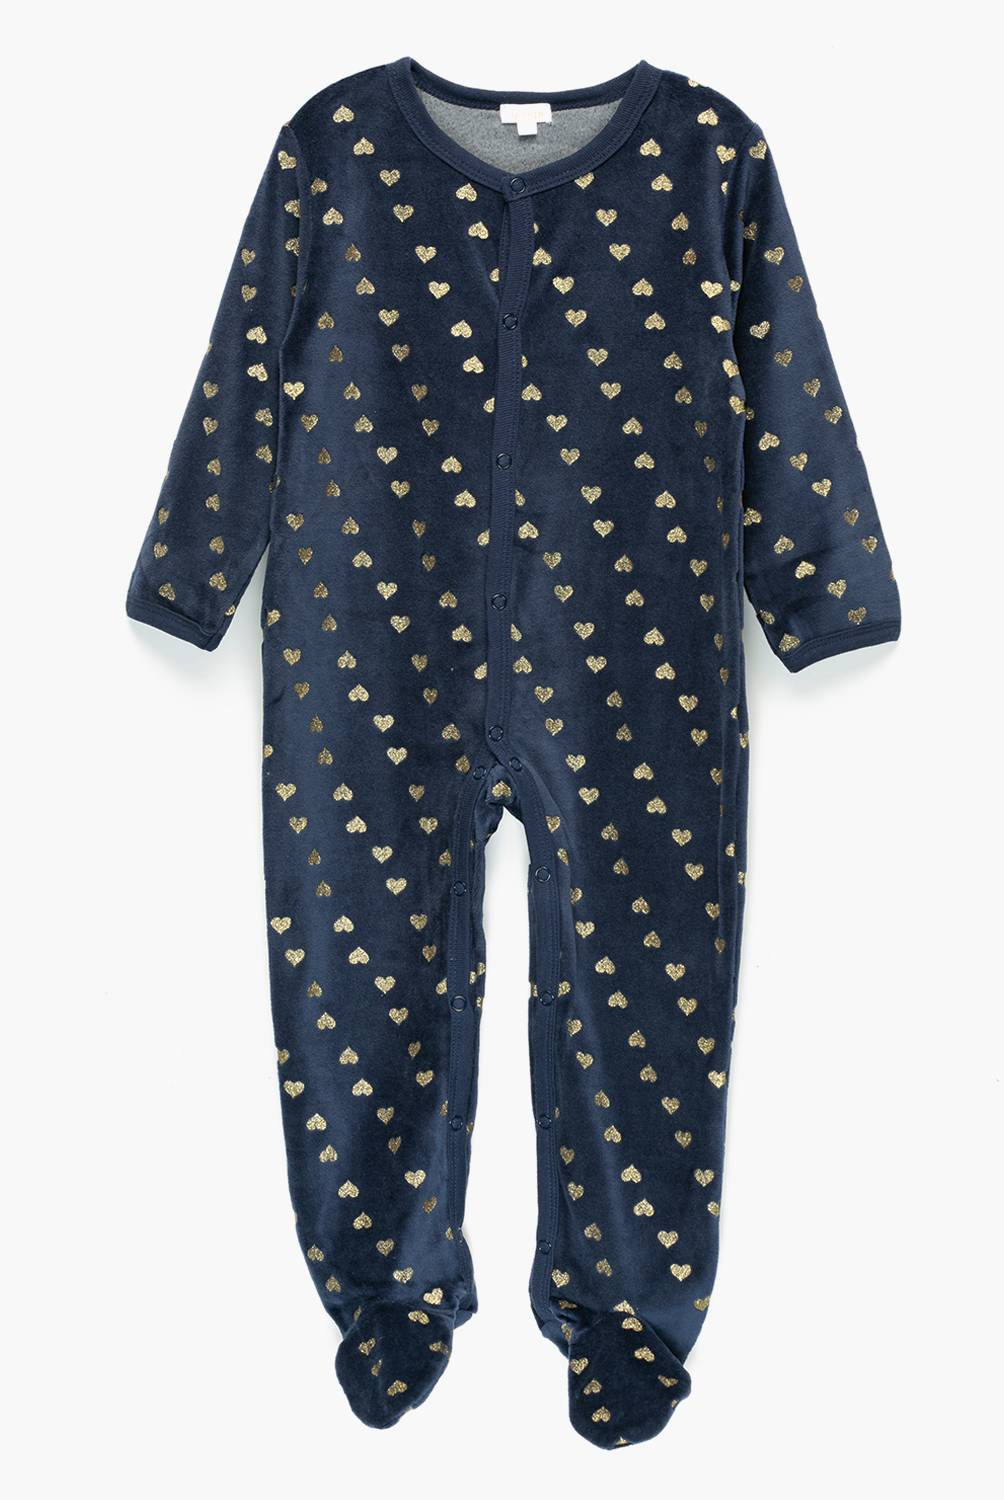 YAMP - Pijama Plush Bebé Niña